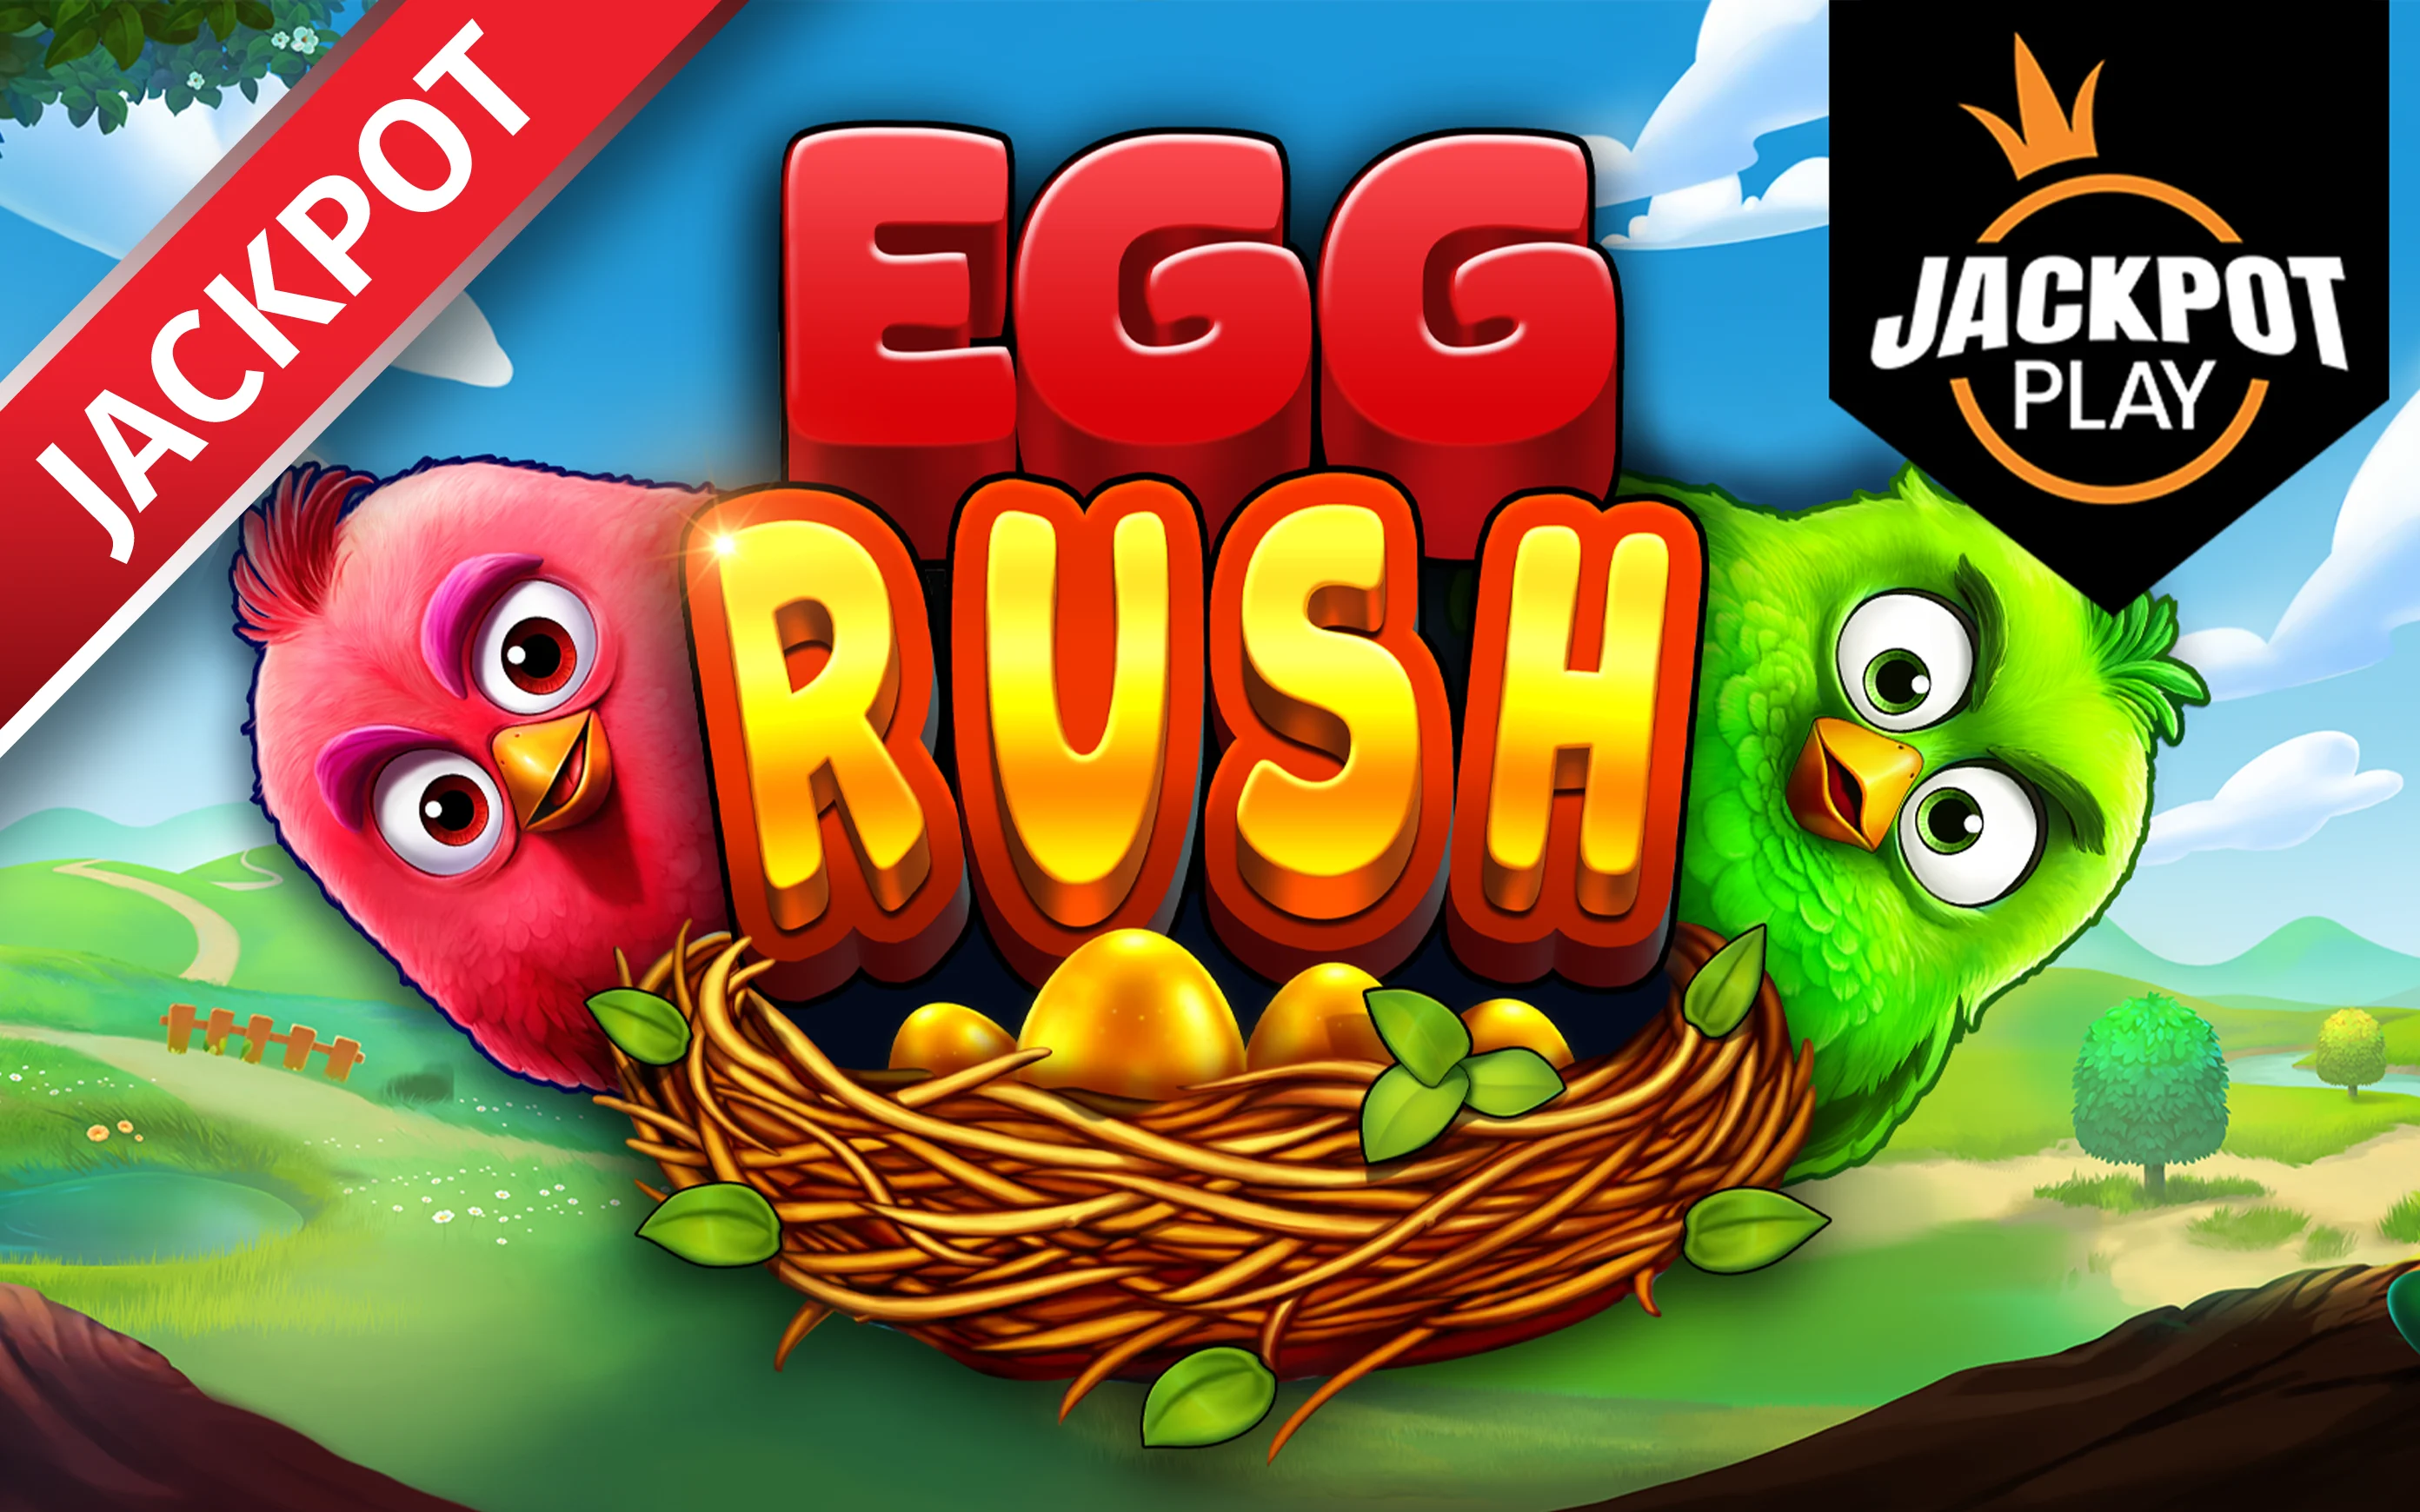 Starcasino.be online casino üzerinden Egg Rush Jackpot Play oynayın